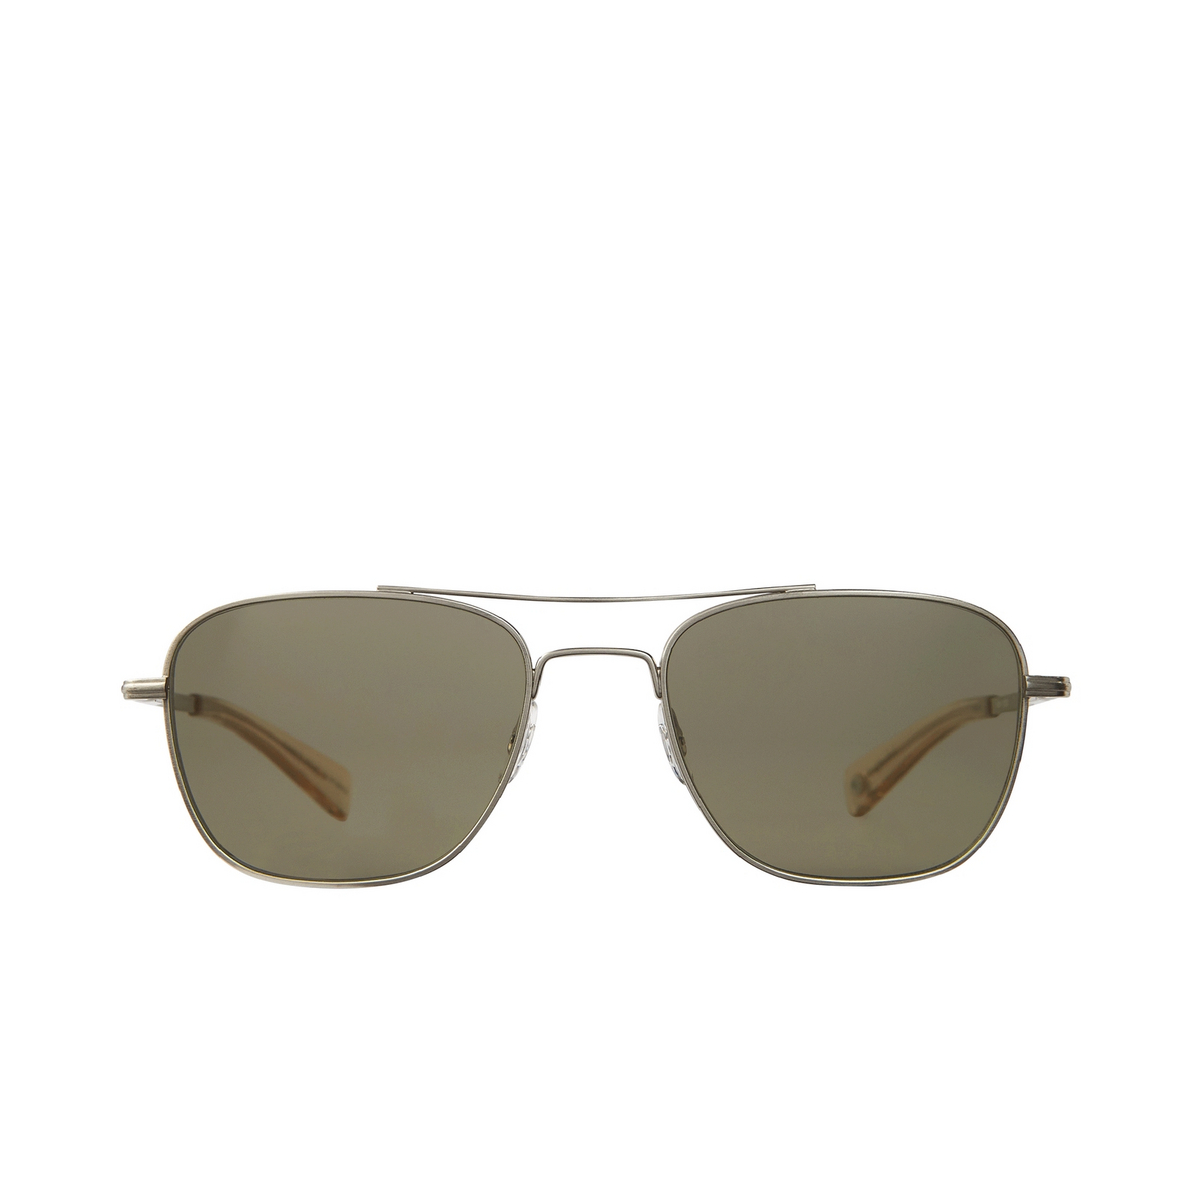 Garrett Leight® Aviator Sunglasses: Harbor Sun color BS-CH/G15SUV Brushed Silver-champagne/g15 Suv - 1/2